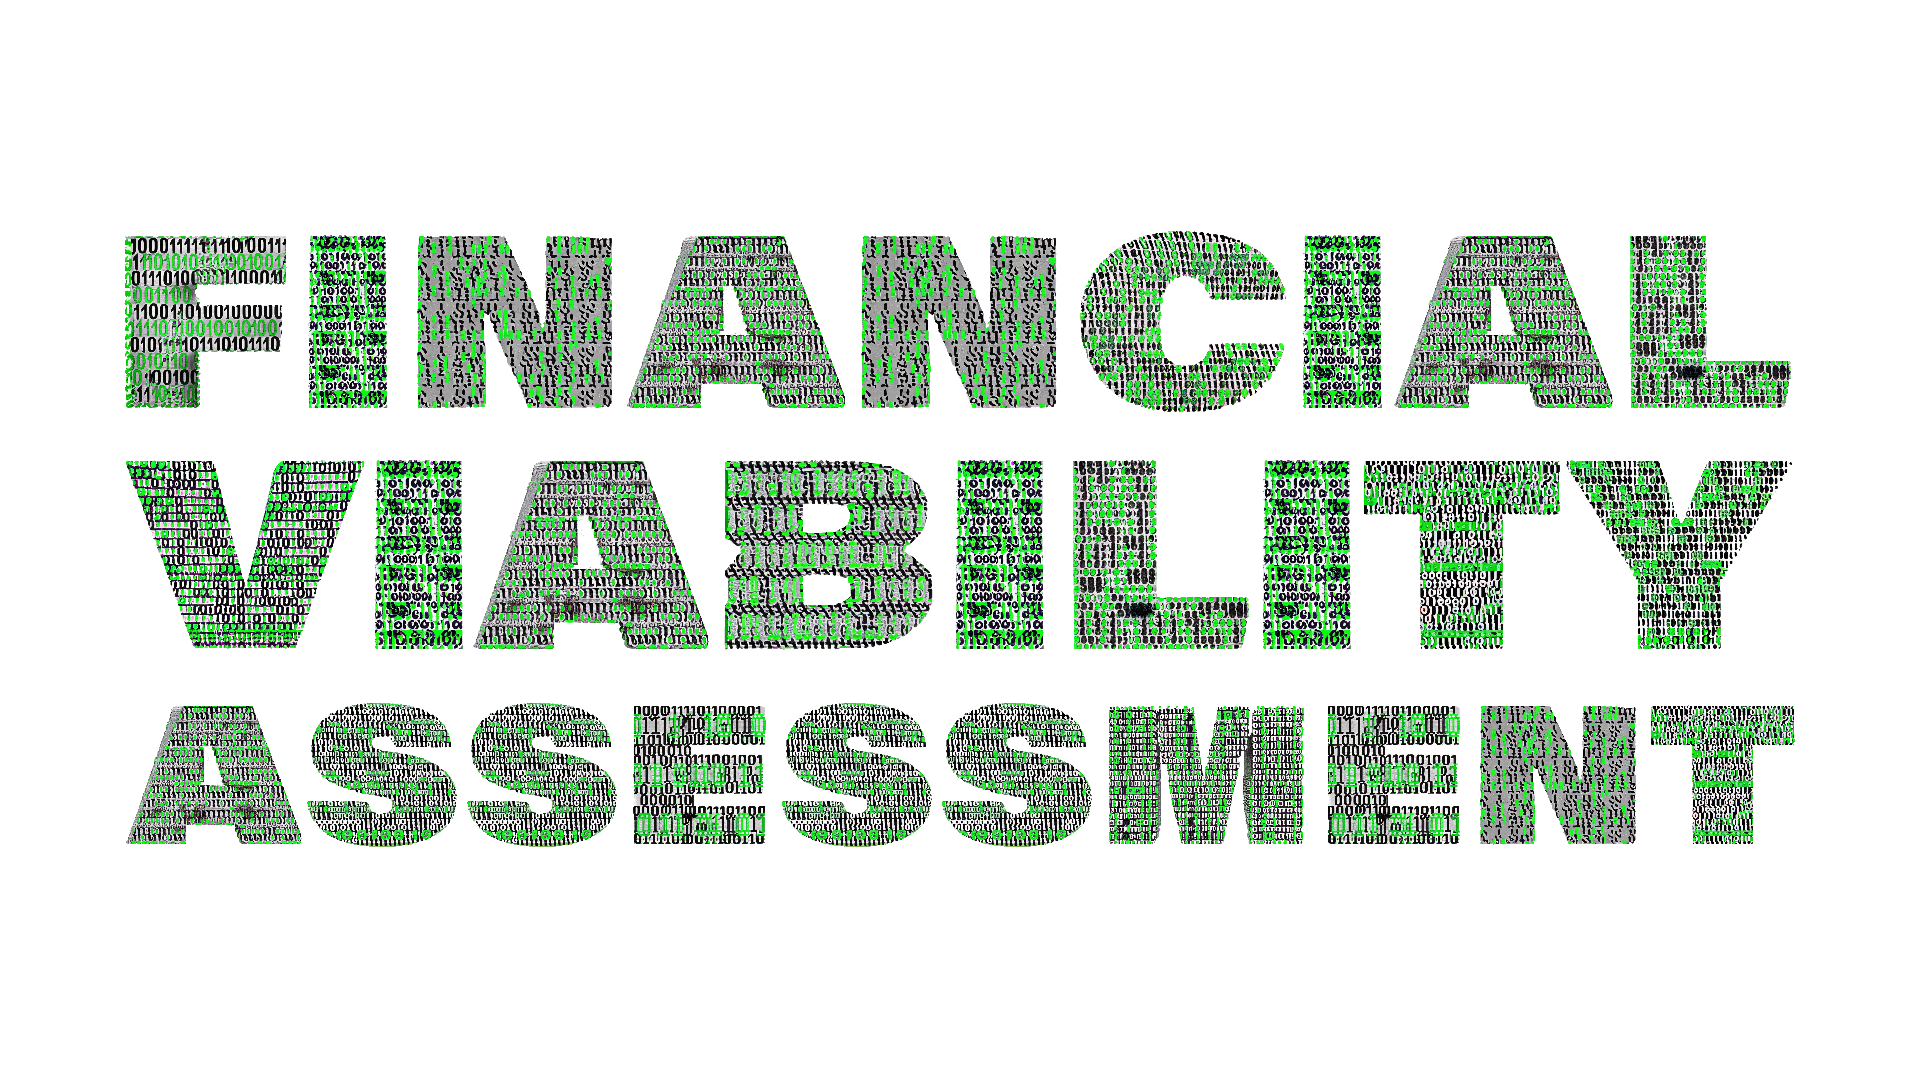 Financial Viability Assessment